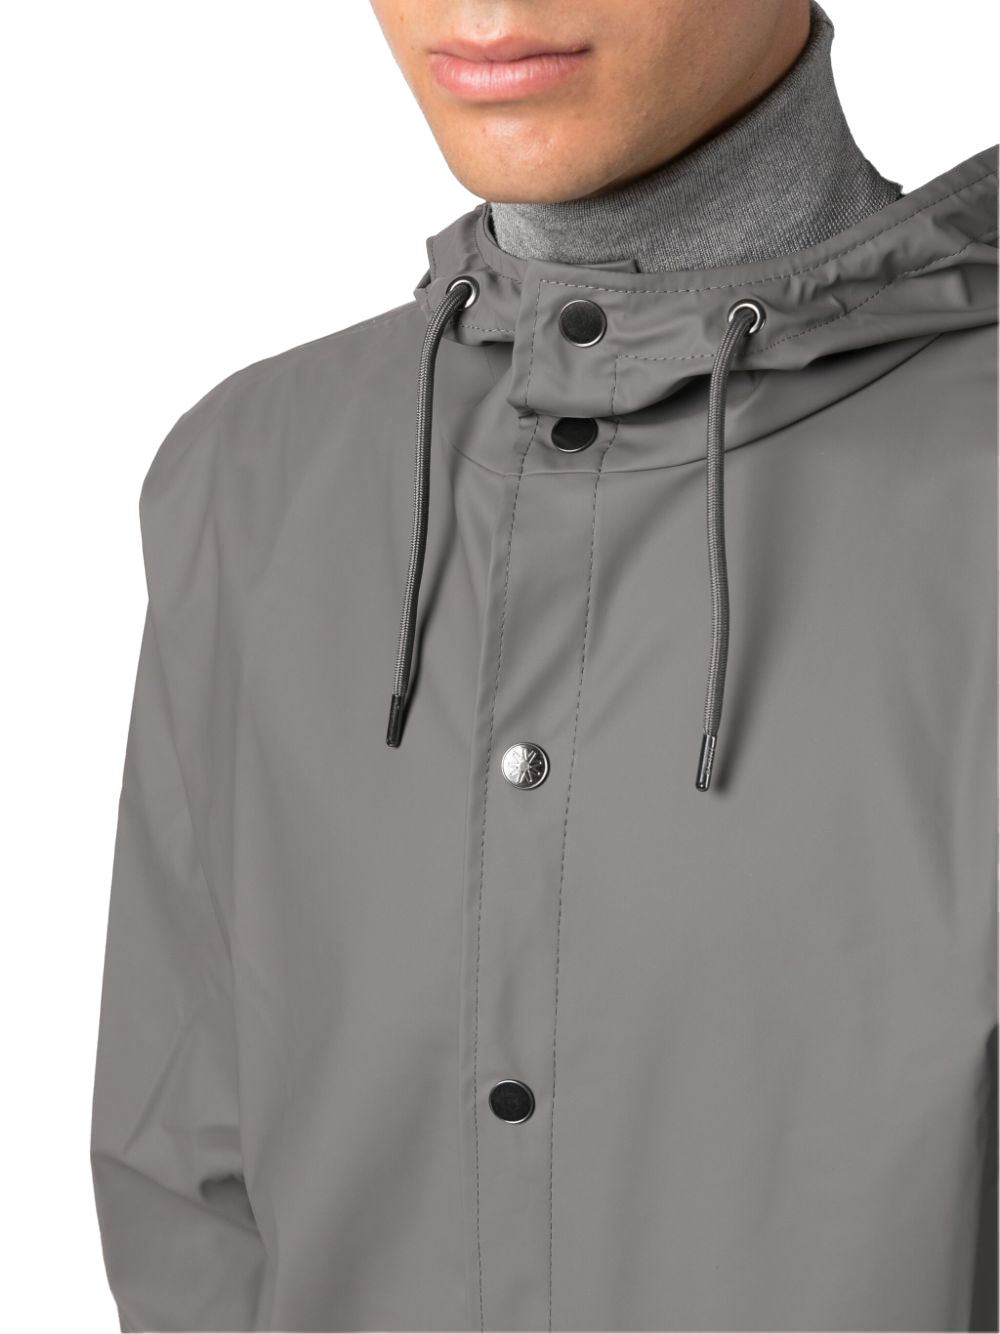 Waterproof Gray Jacket